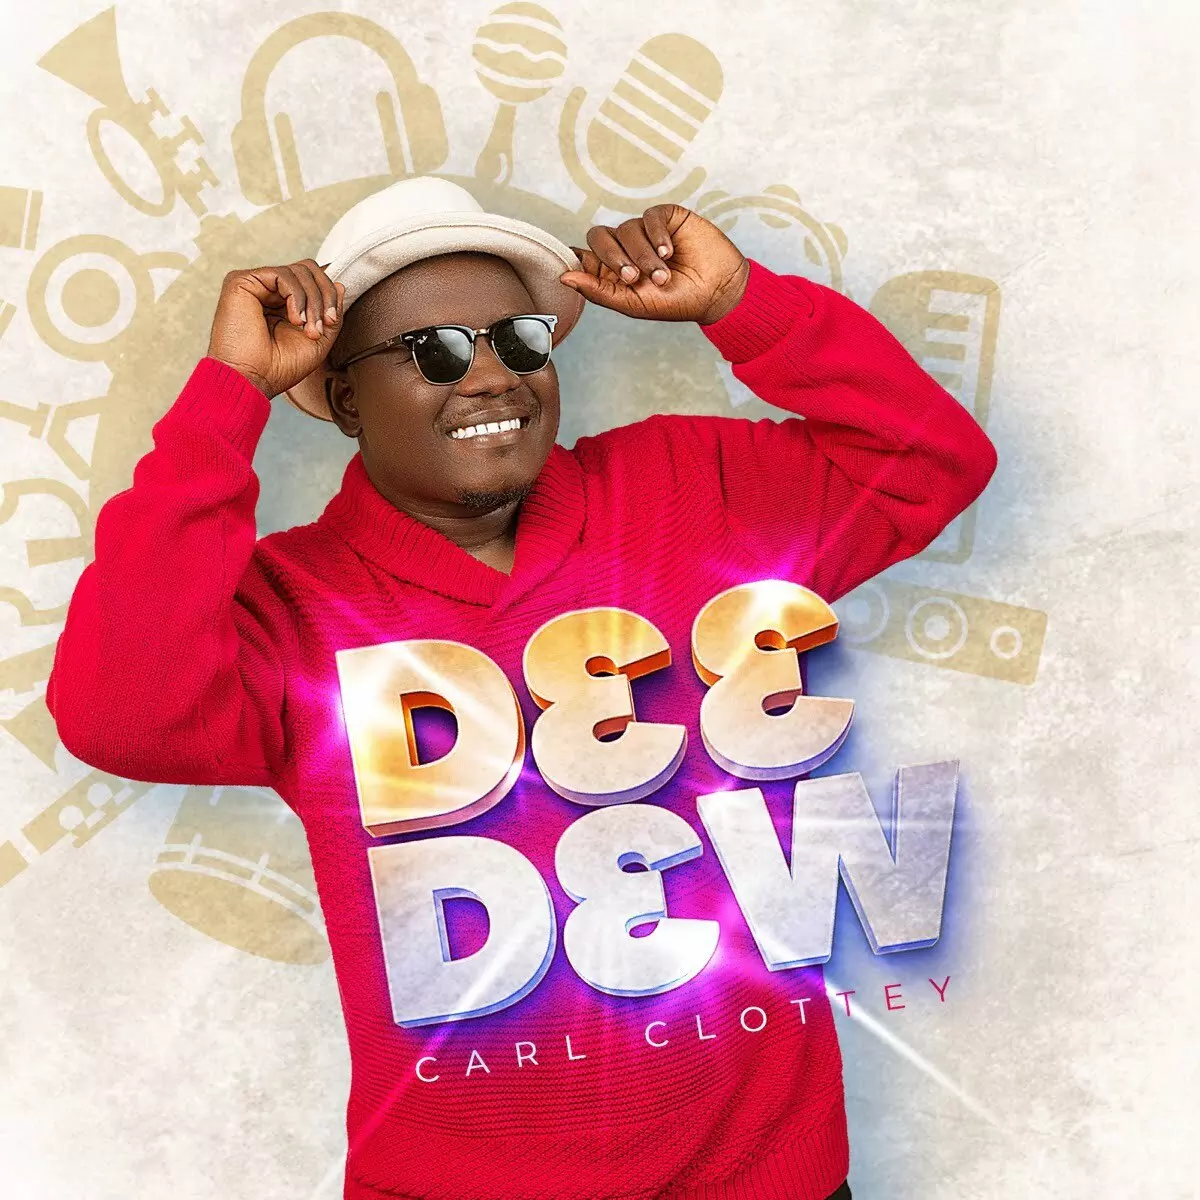 Deedew - Single by Carl Clottey on Apple Music